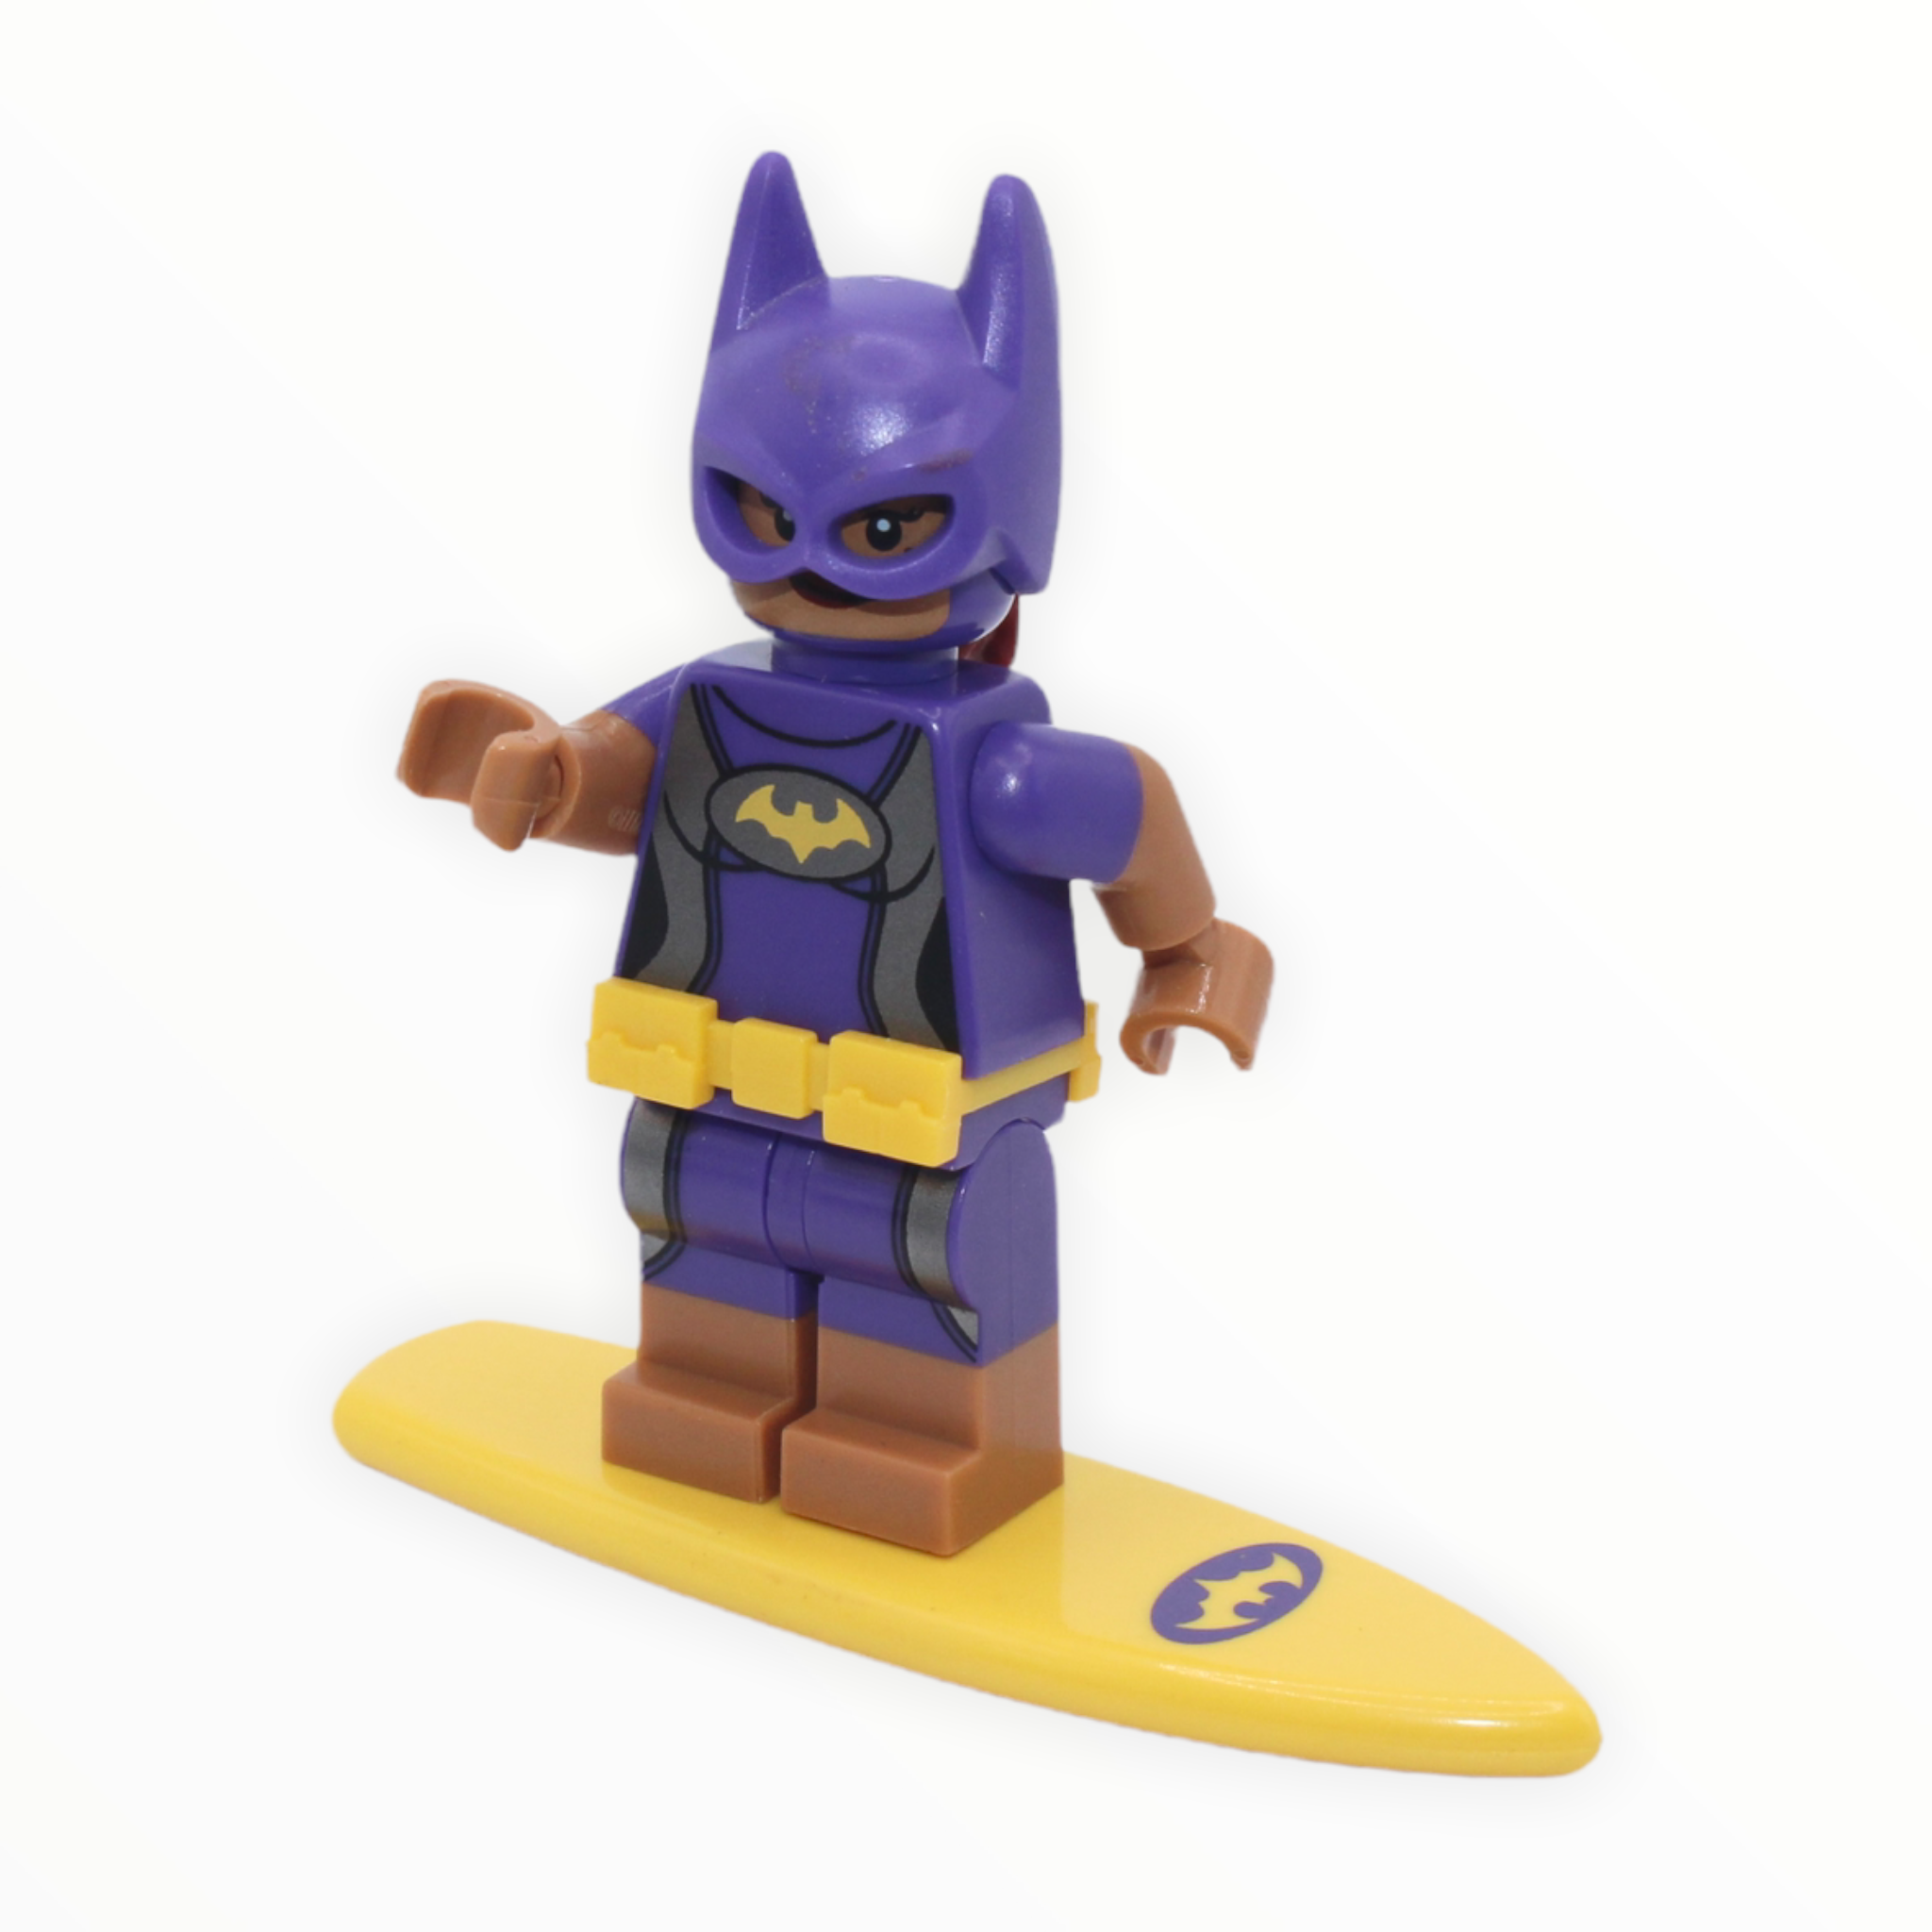 The LEGO Batman Movie Series 2: Vacation Batgirl